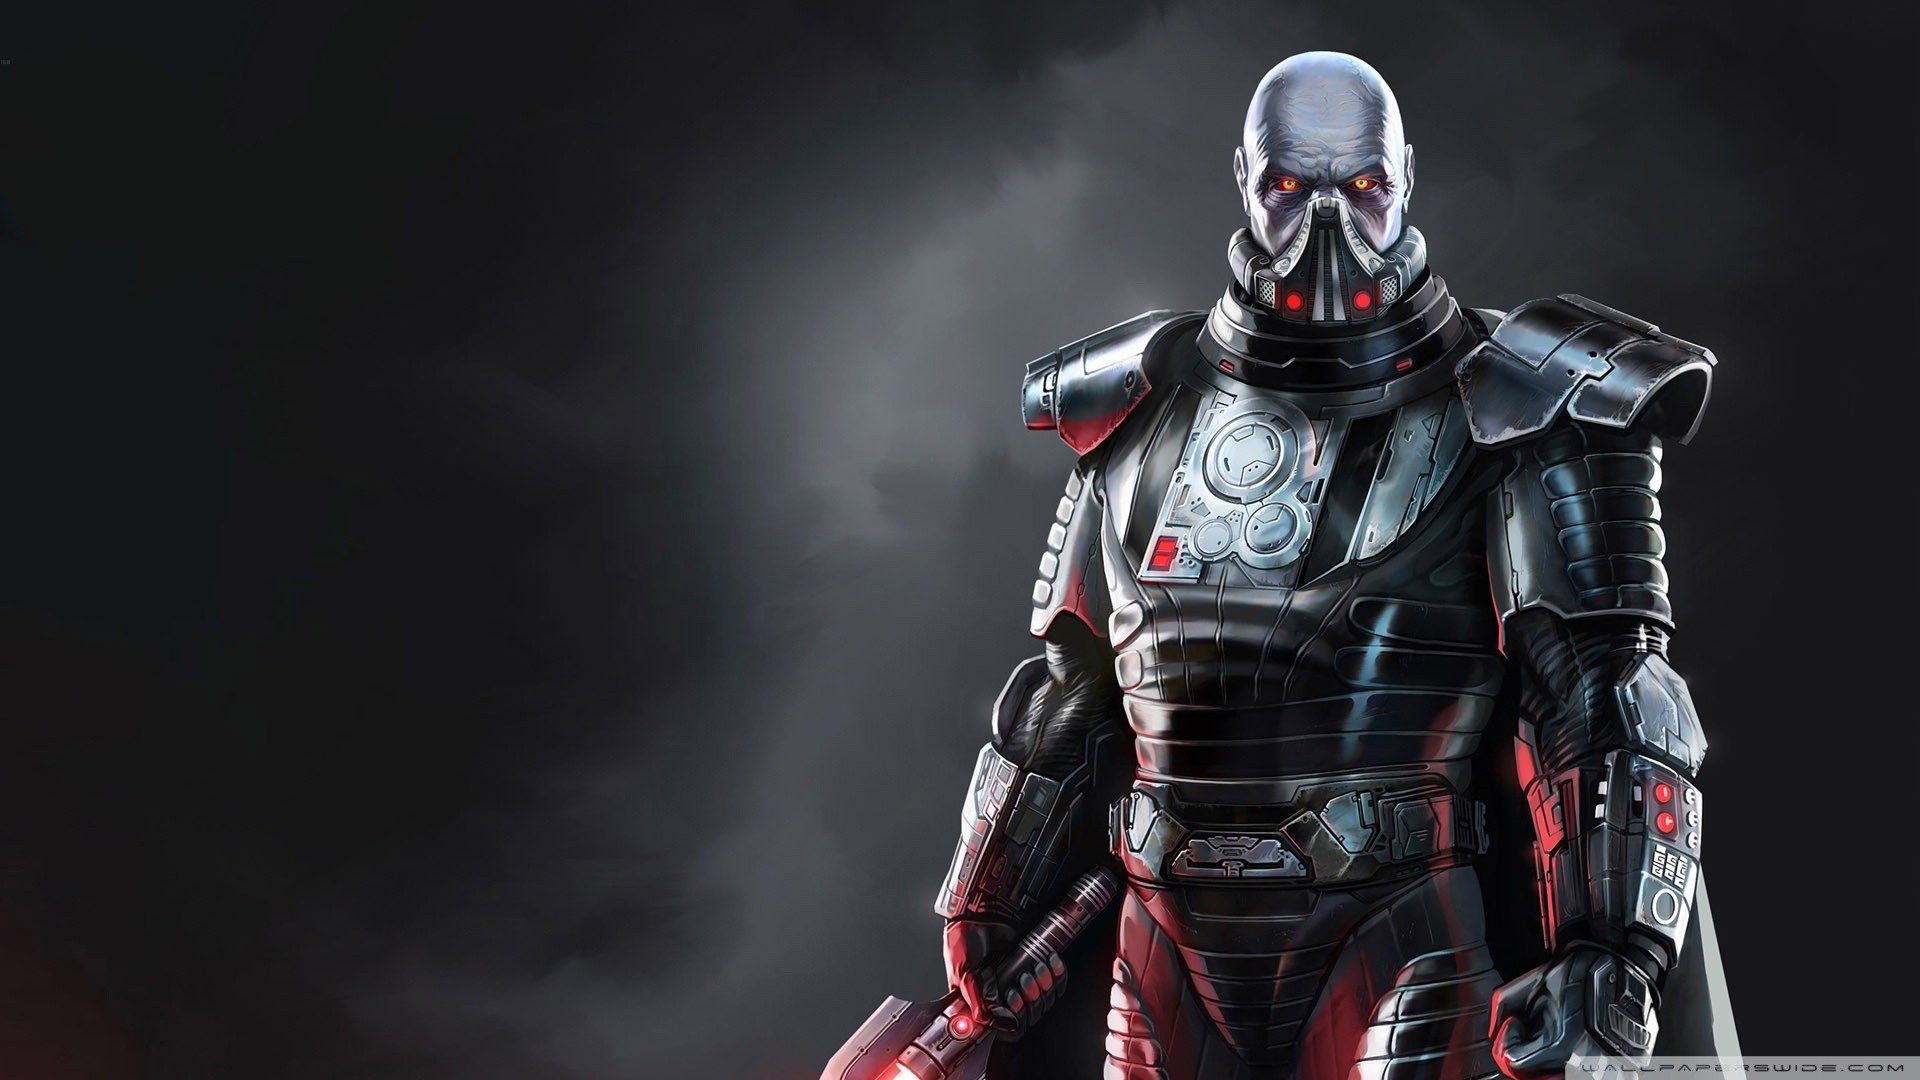 Star Wars dark red Metal Sith armor dark side science fiction